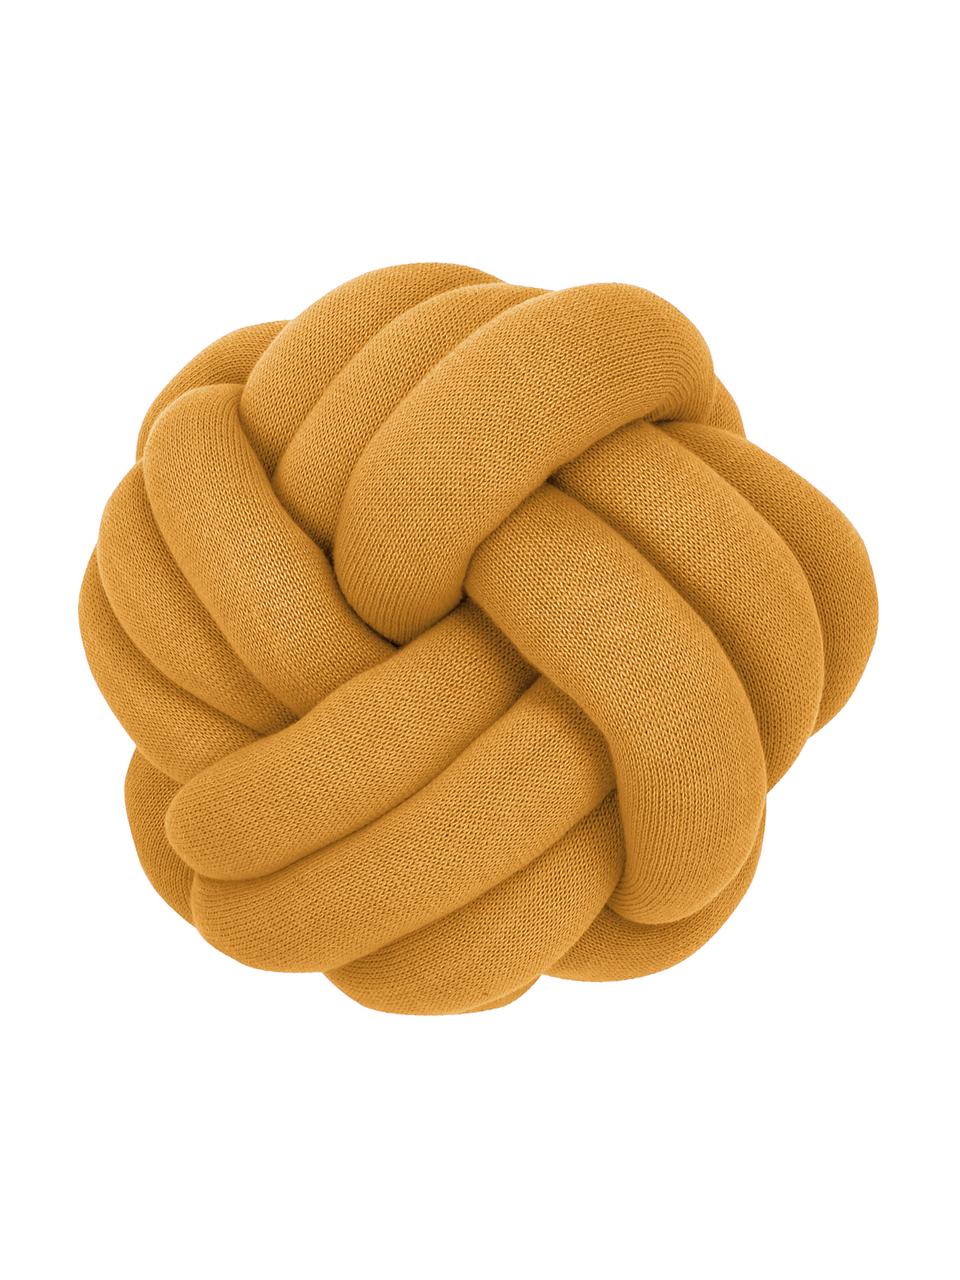 Coussin nœud jaune moutarde Twist, Jaune moutarde, Ø 30 cm